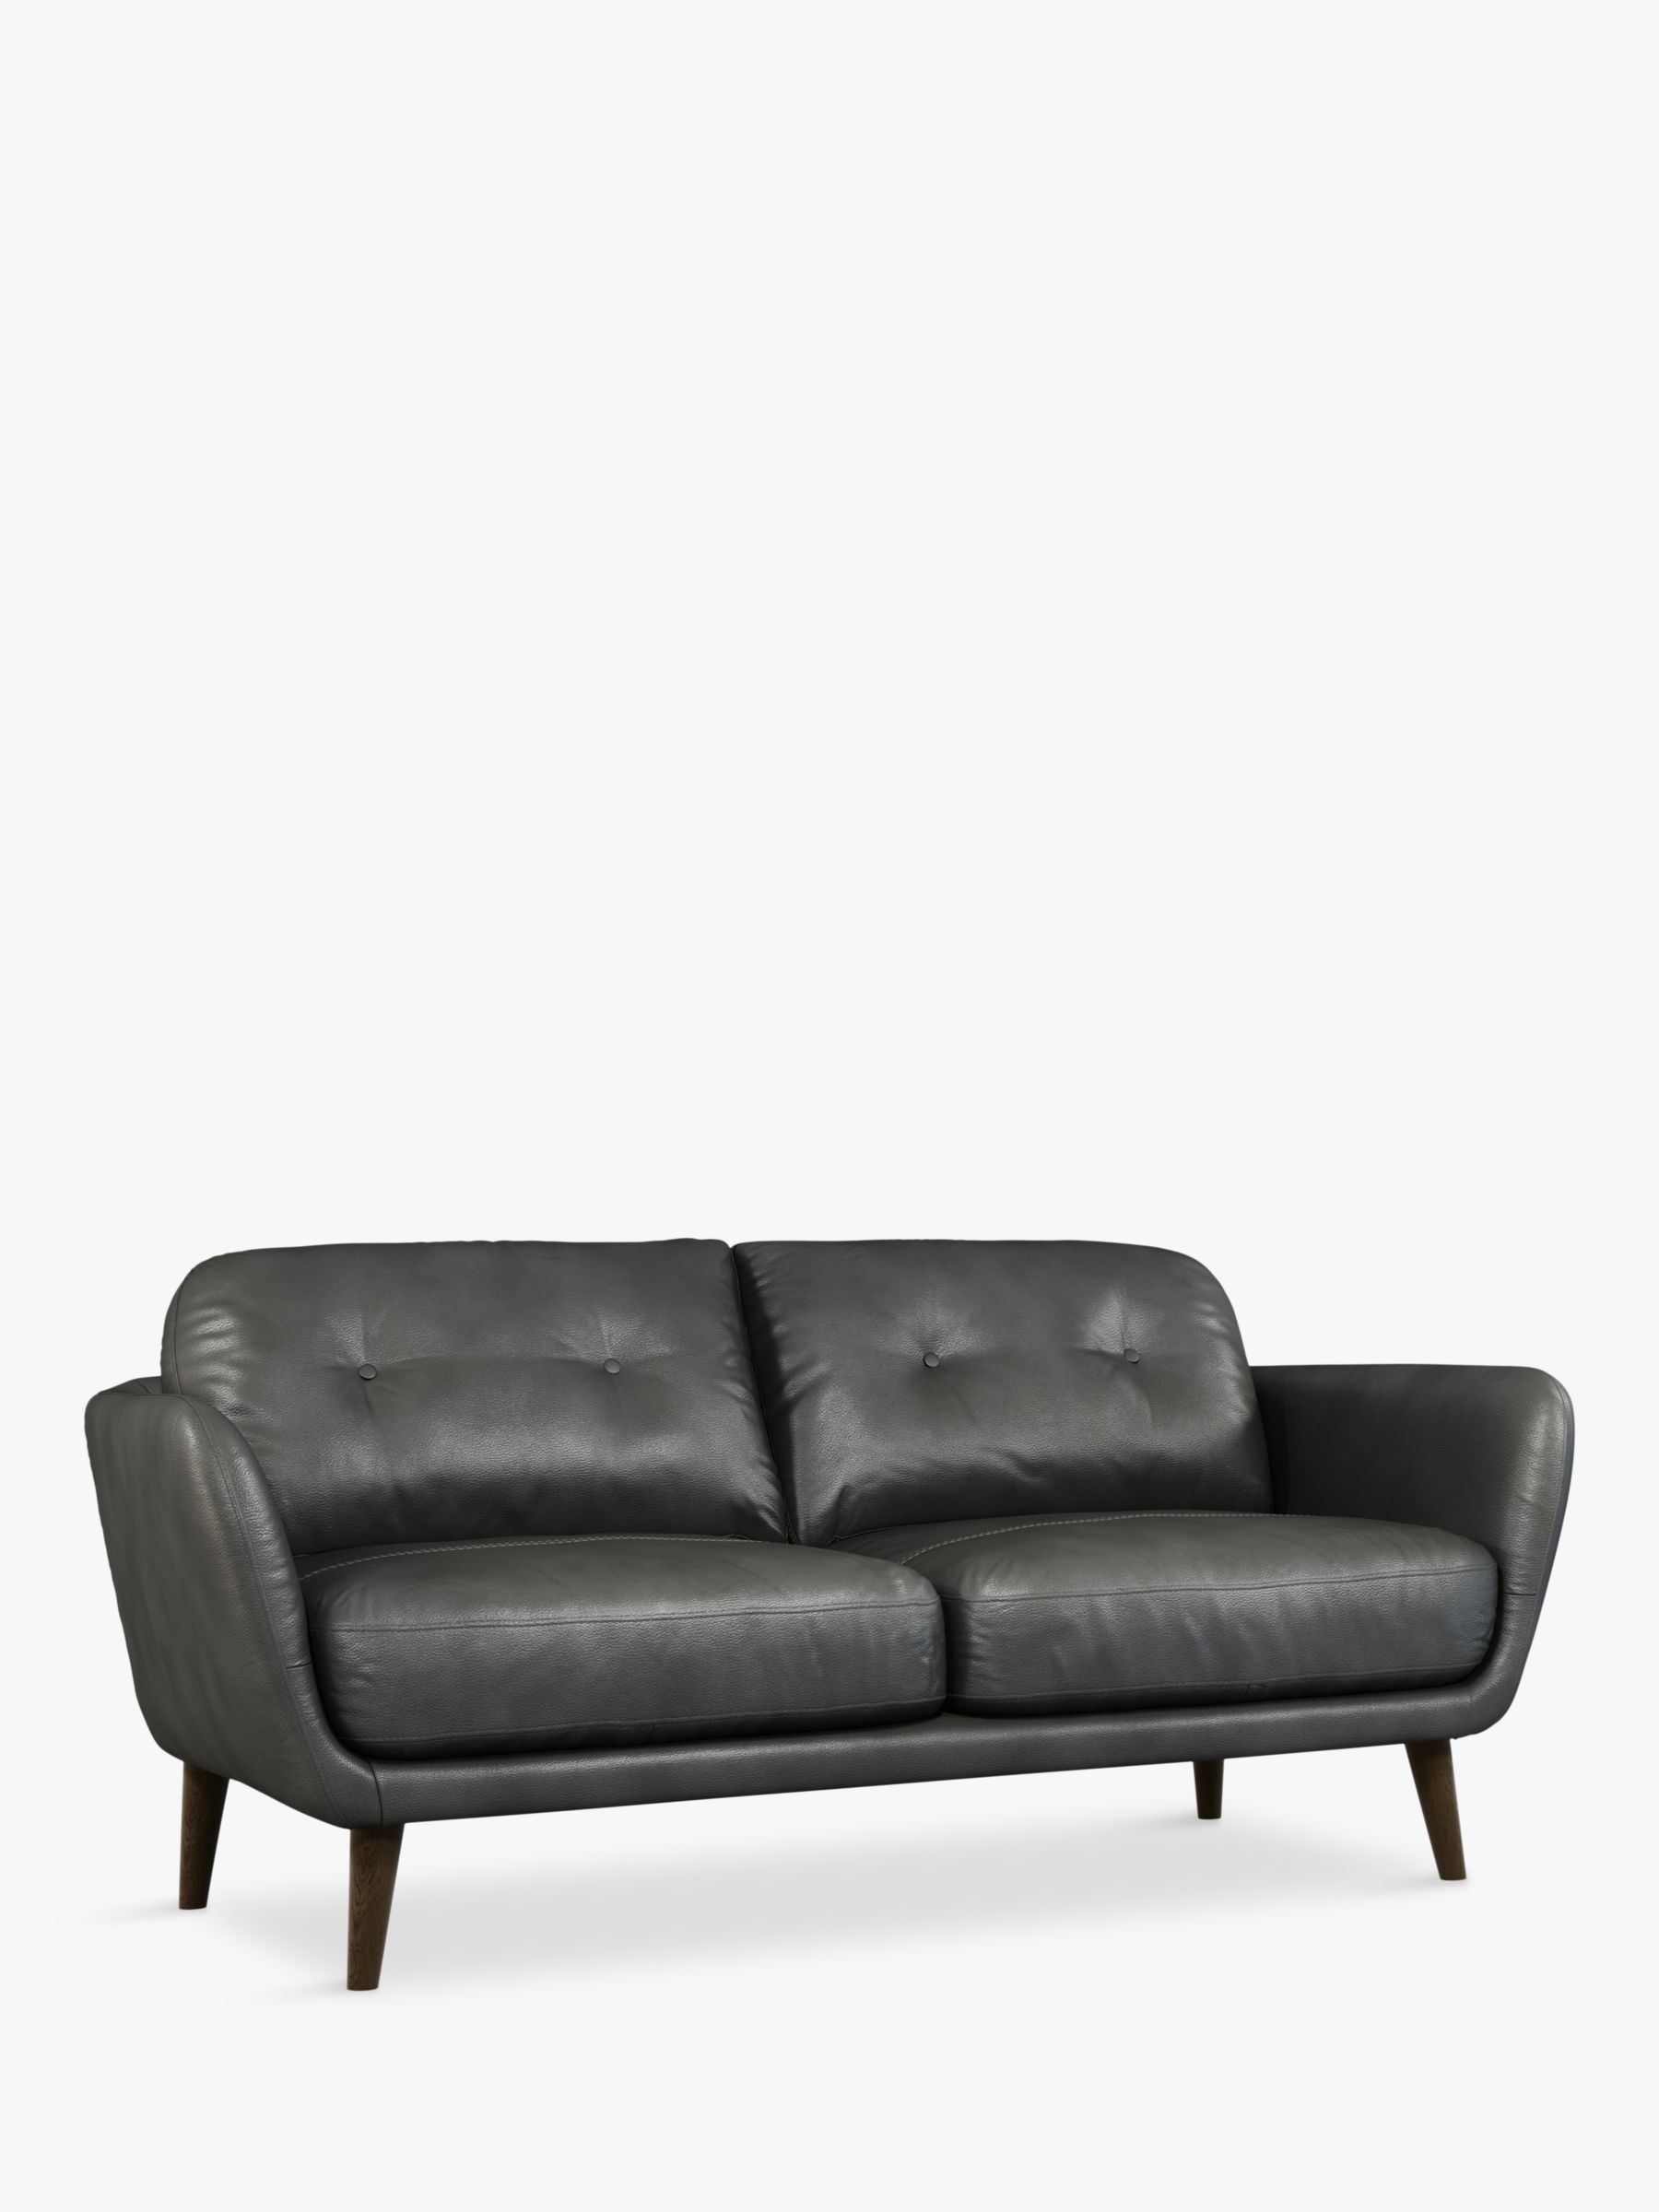 Photo of John lewis arlo medium 2 seater leather sofa dark leg winchester anthracite